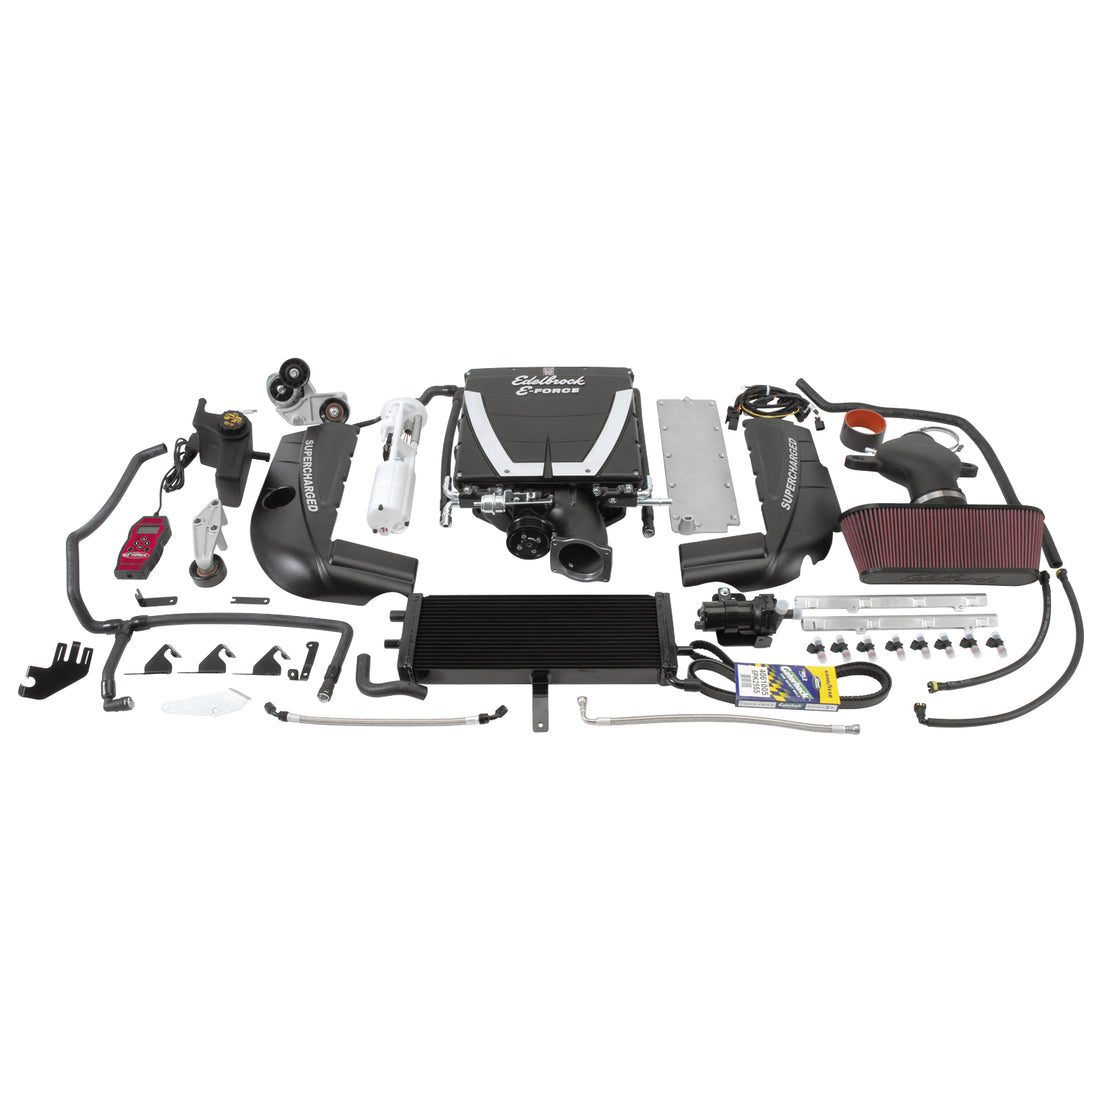 Edelbrock Stage 2 Supercharger Kit #1591 For 2008-13 Corvette LS3 W/ Tune Edelbrock